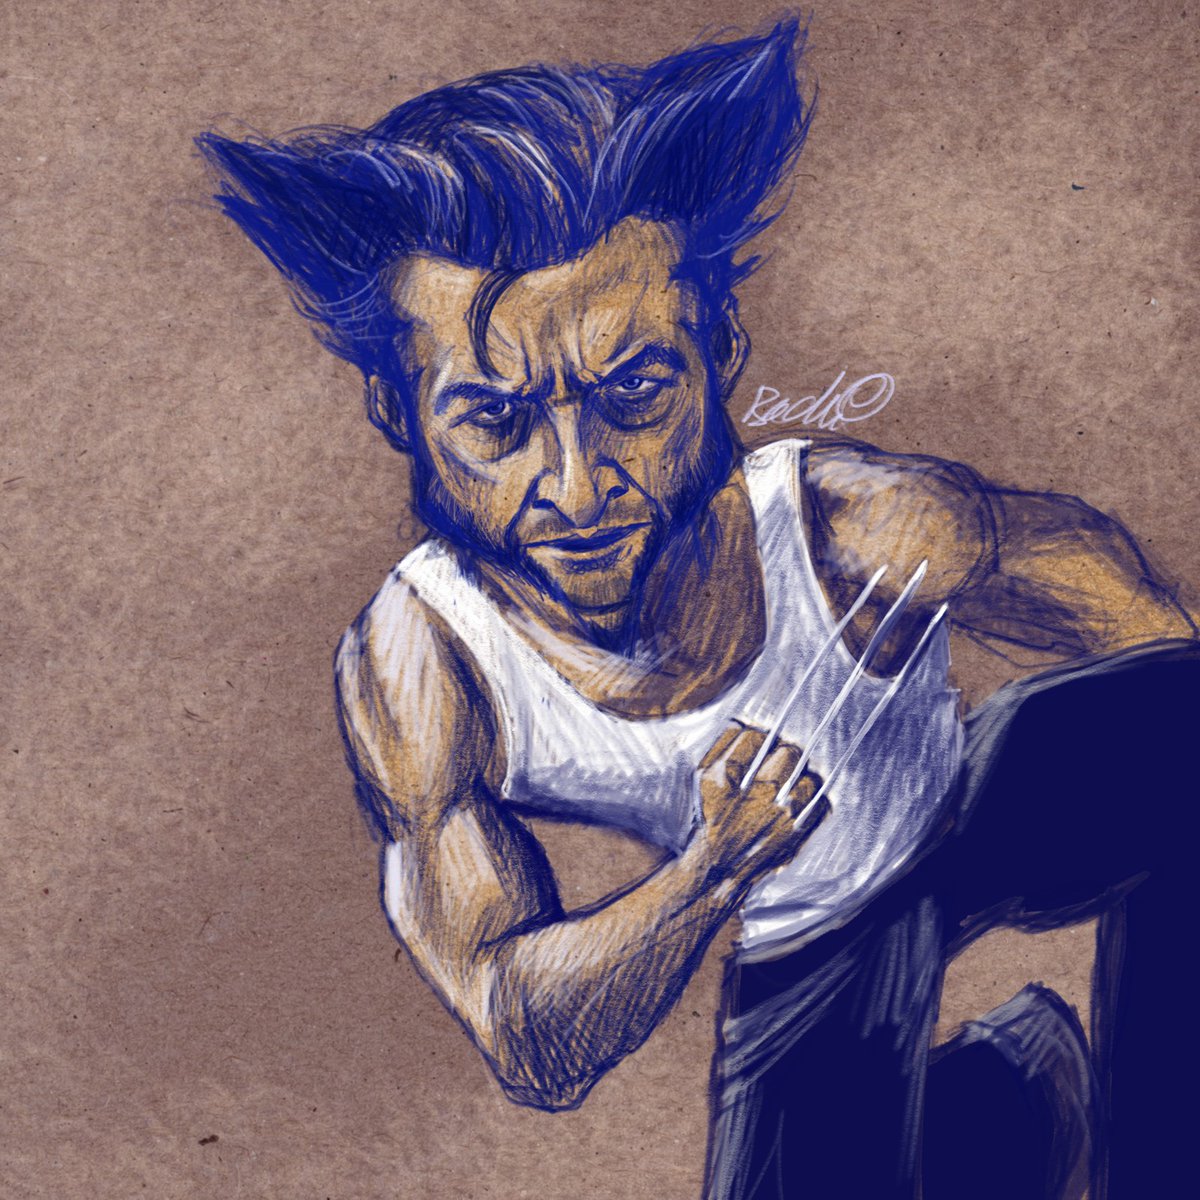 Caricature #caricaturesbybadri #caricature #art #digitalart #DigitalArtist #hughJackman #Wolverine #xmen #openforcommissions #commissionsopen